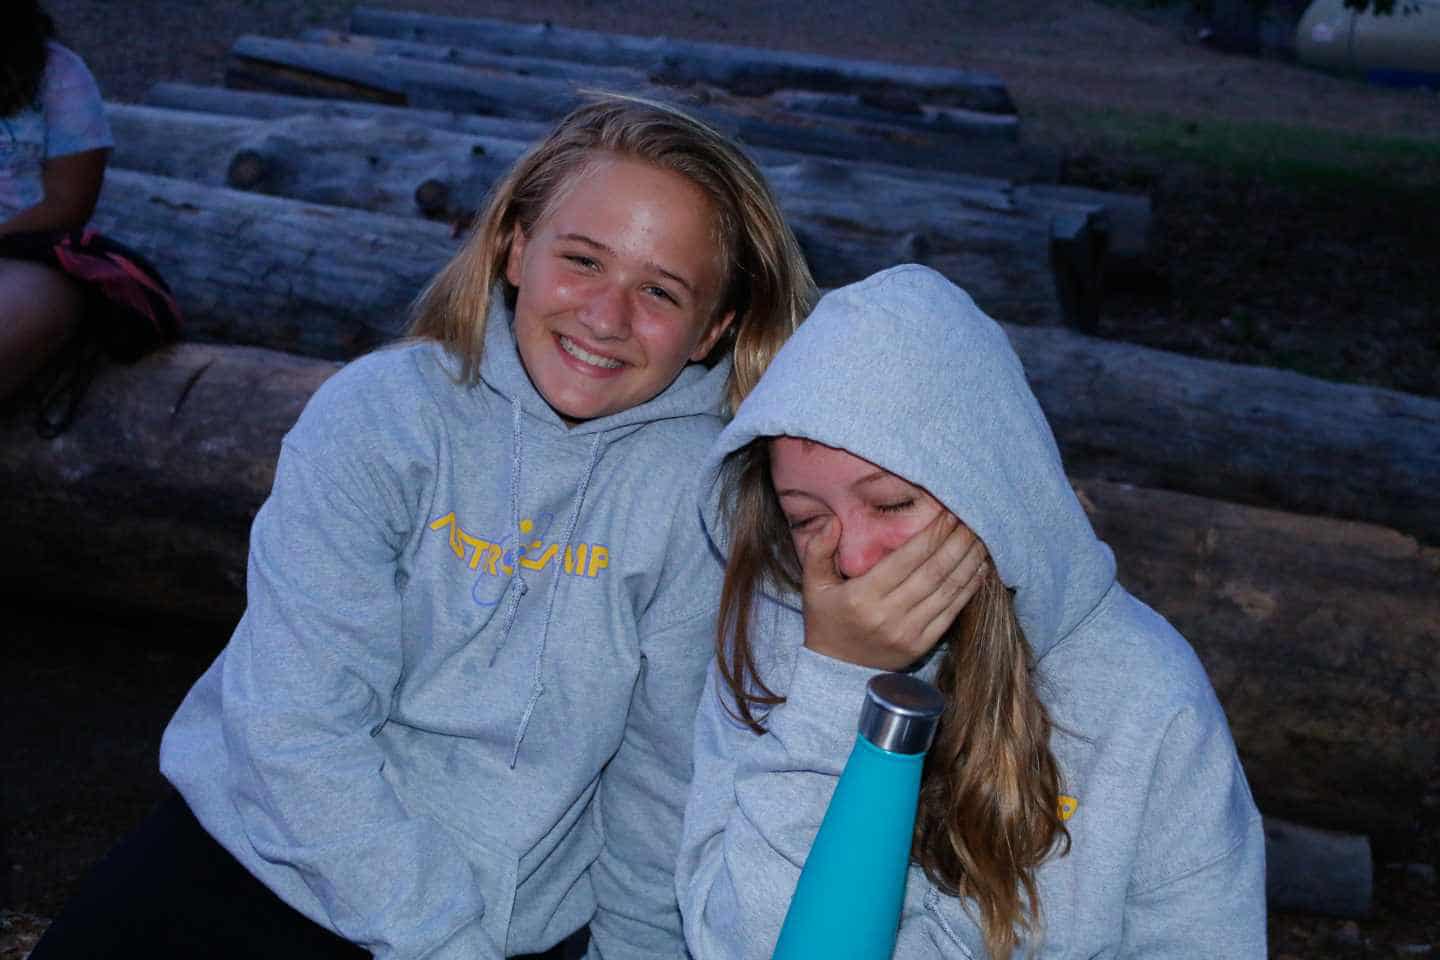 Two girls laughing.